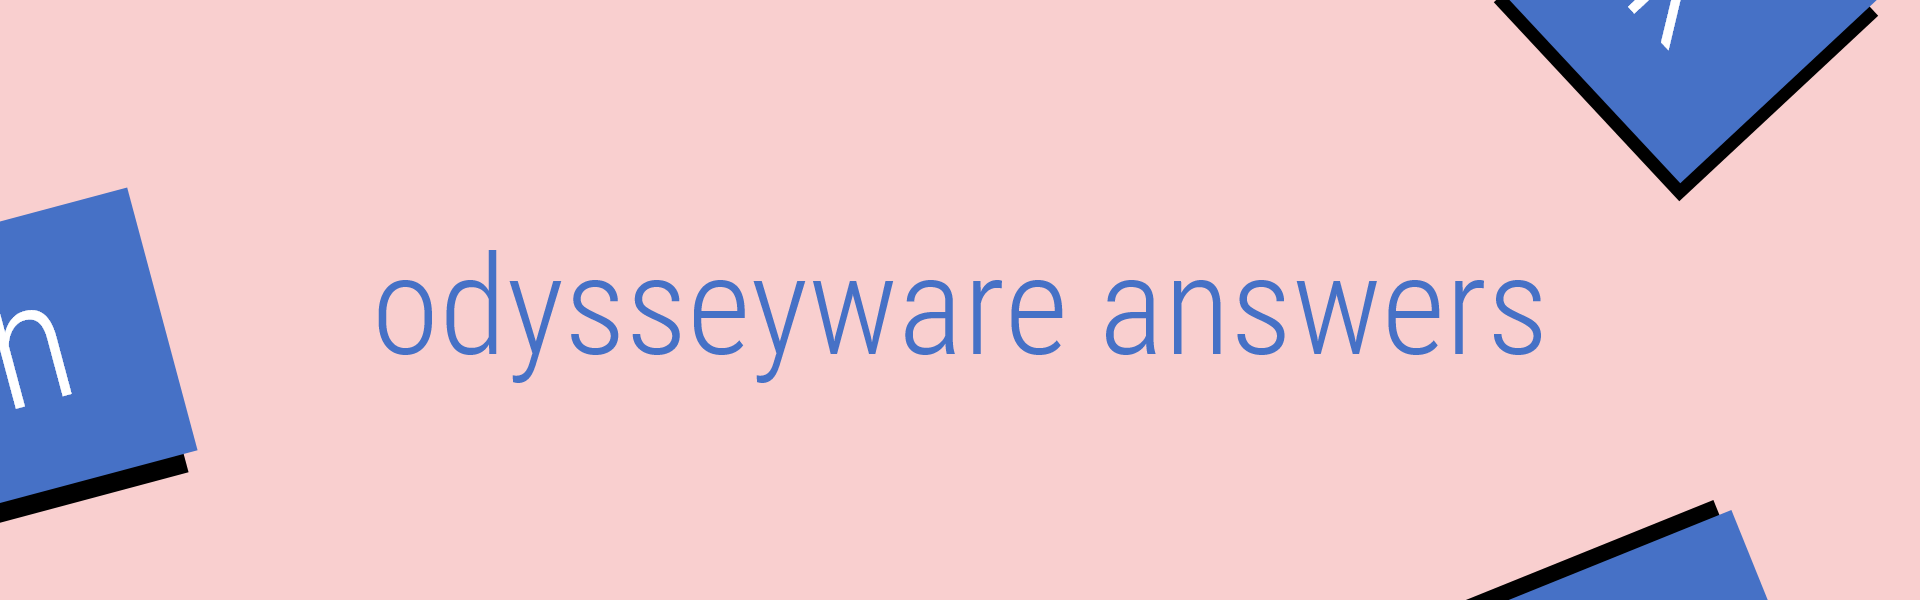 odysseyware answers